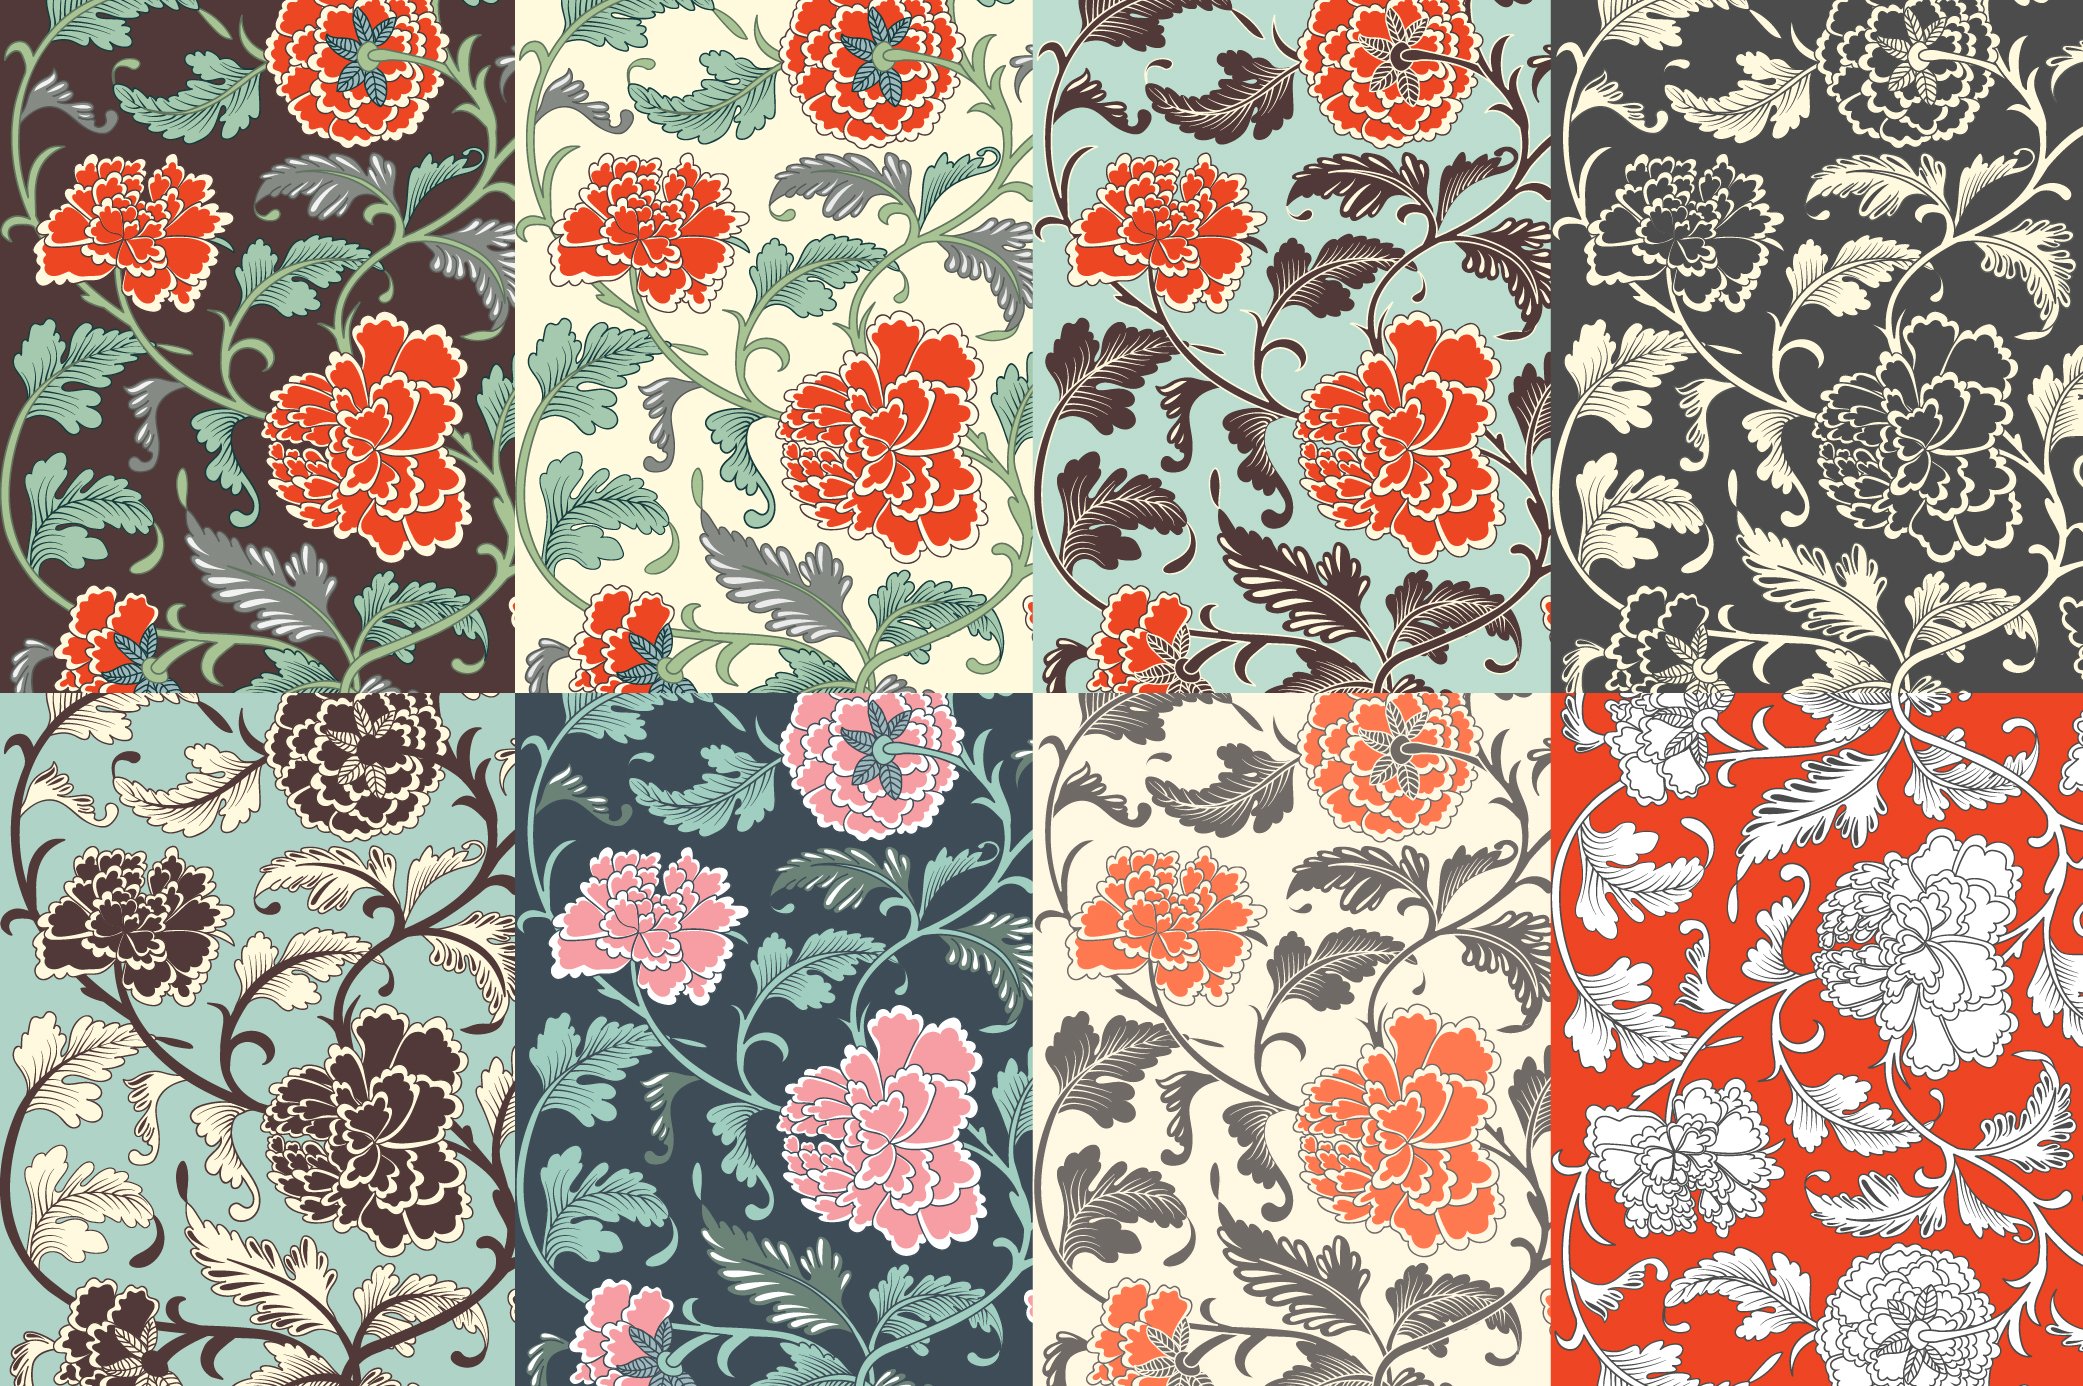 A set of four floral wallpaper designs.